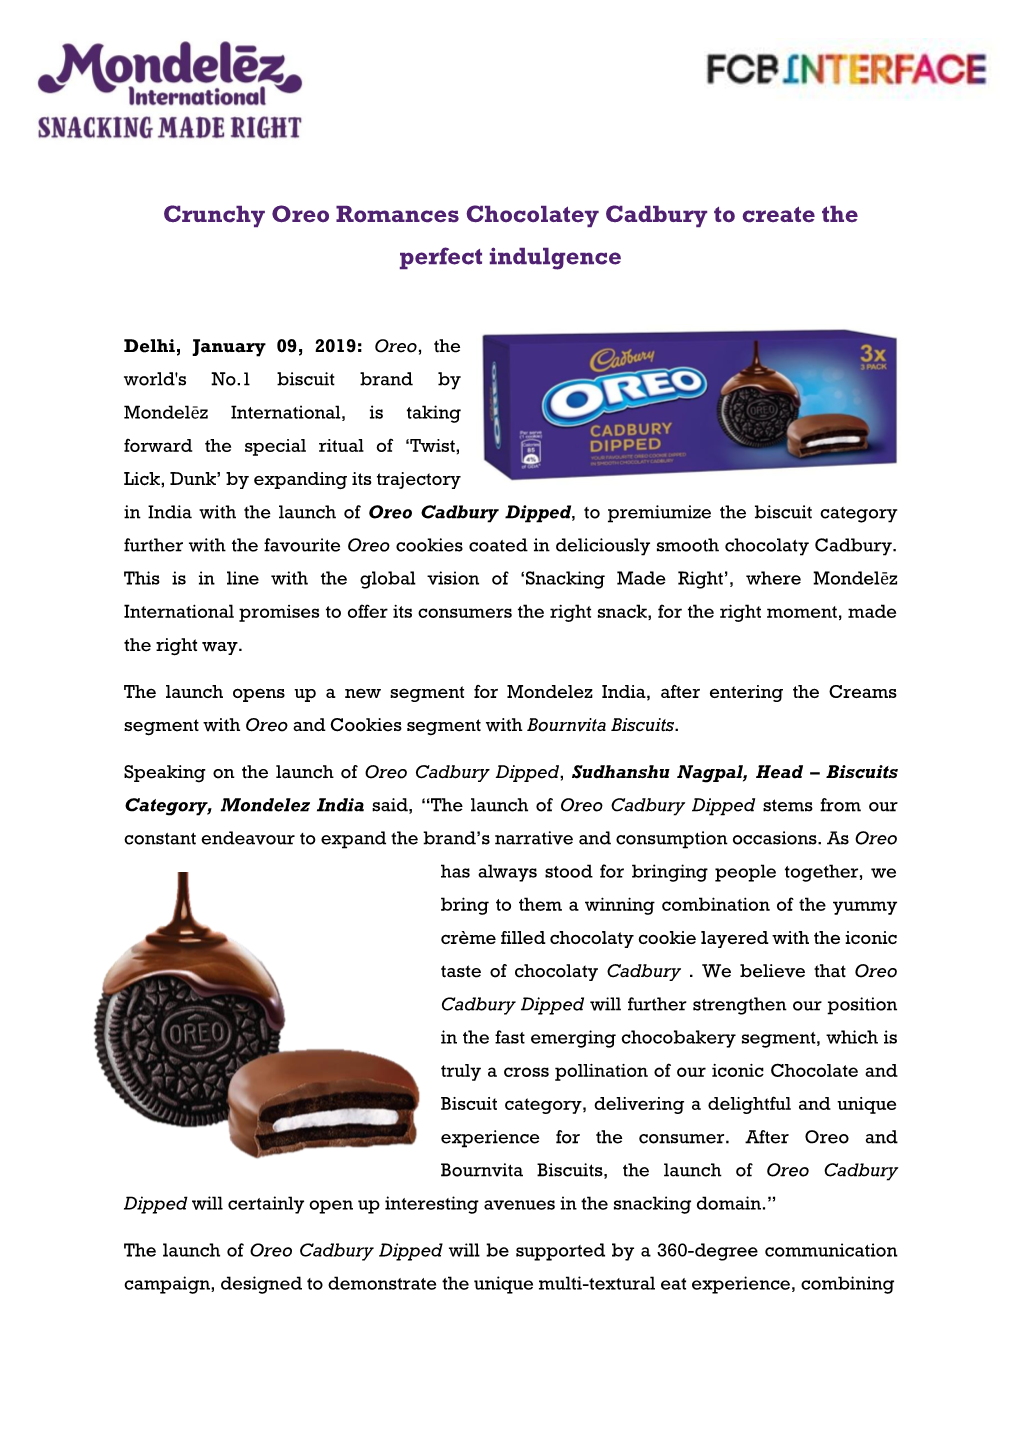 Crunchy Oreo Romances Chocolatey Cadbury to Create the Perfect Indulgence